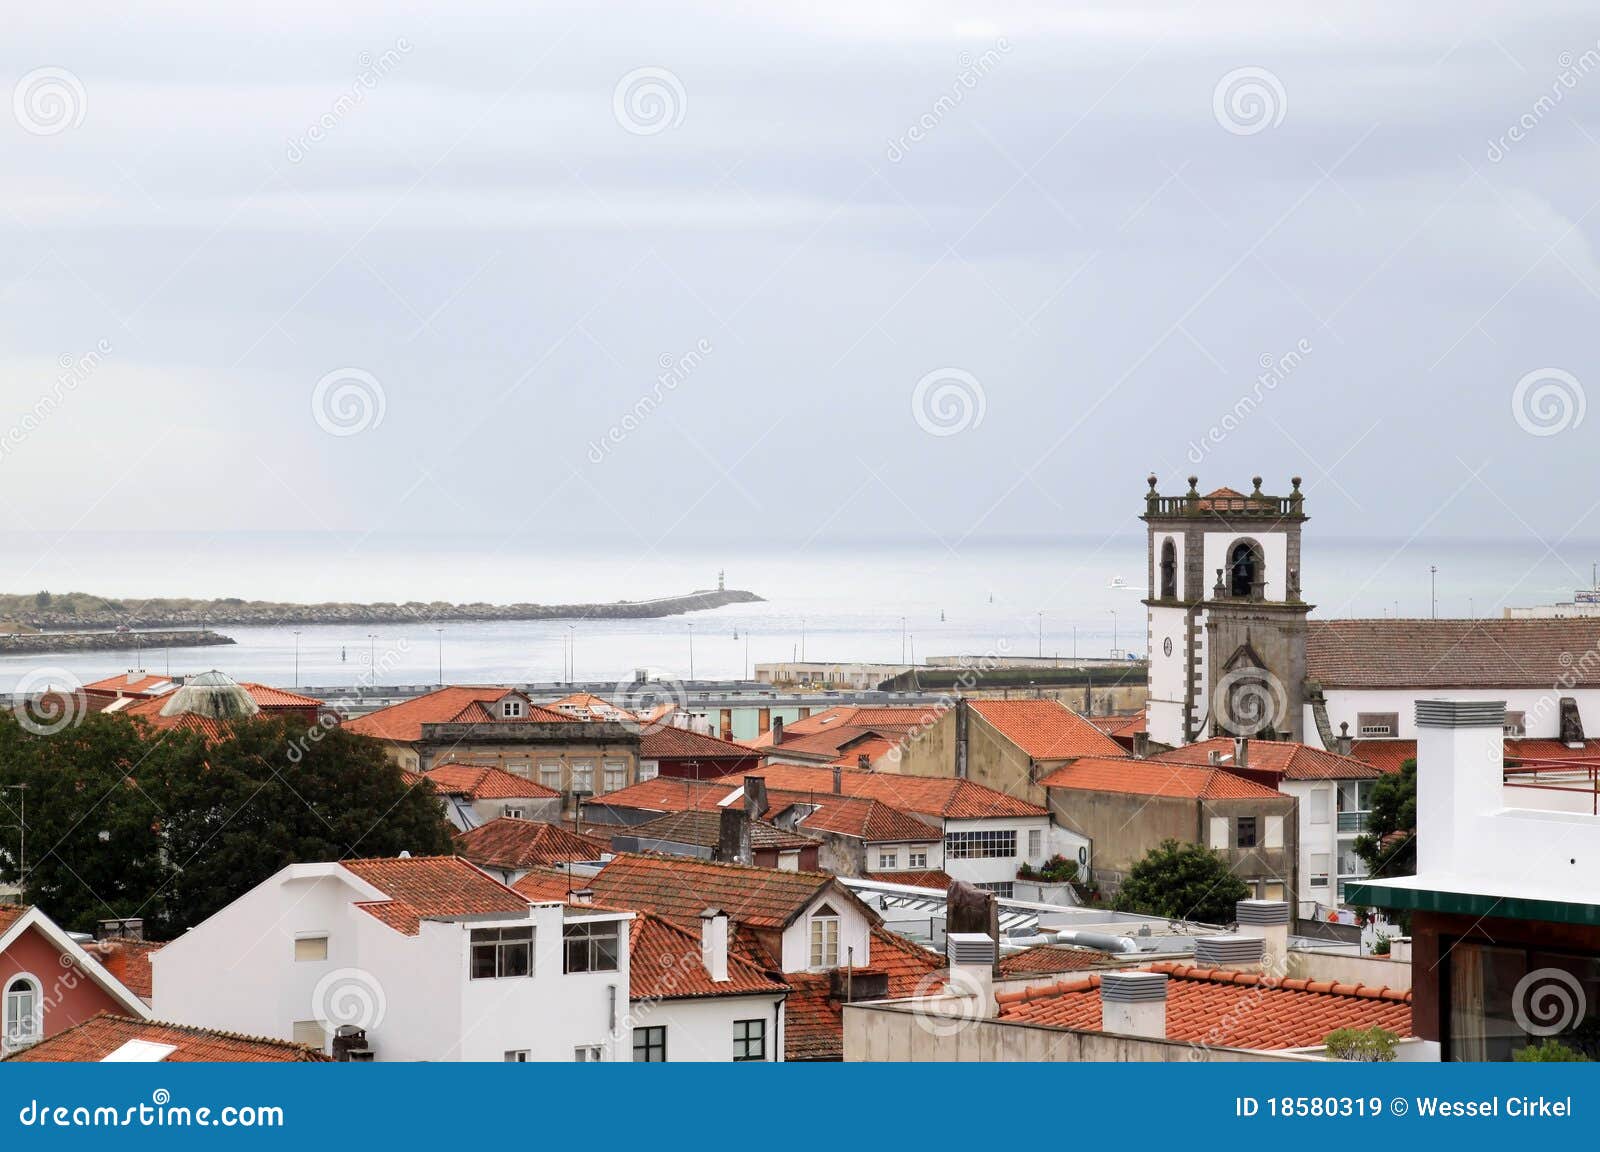 vila do conde and the atlantic ocean, portugal